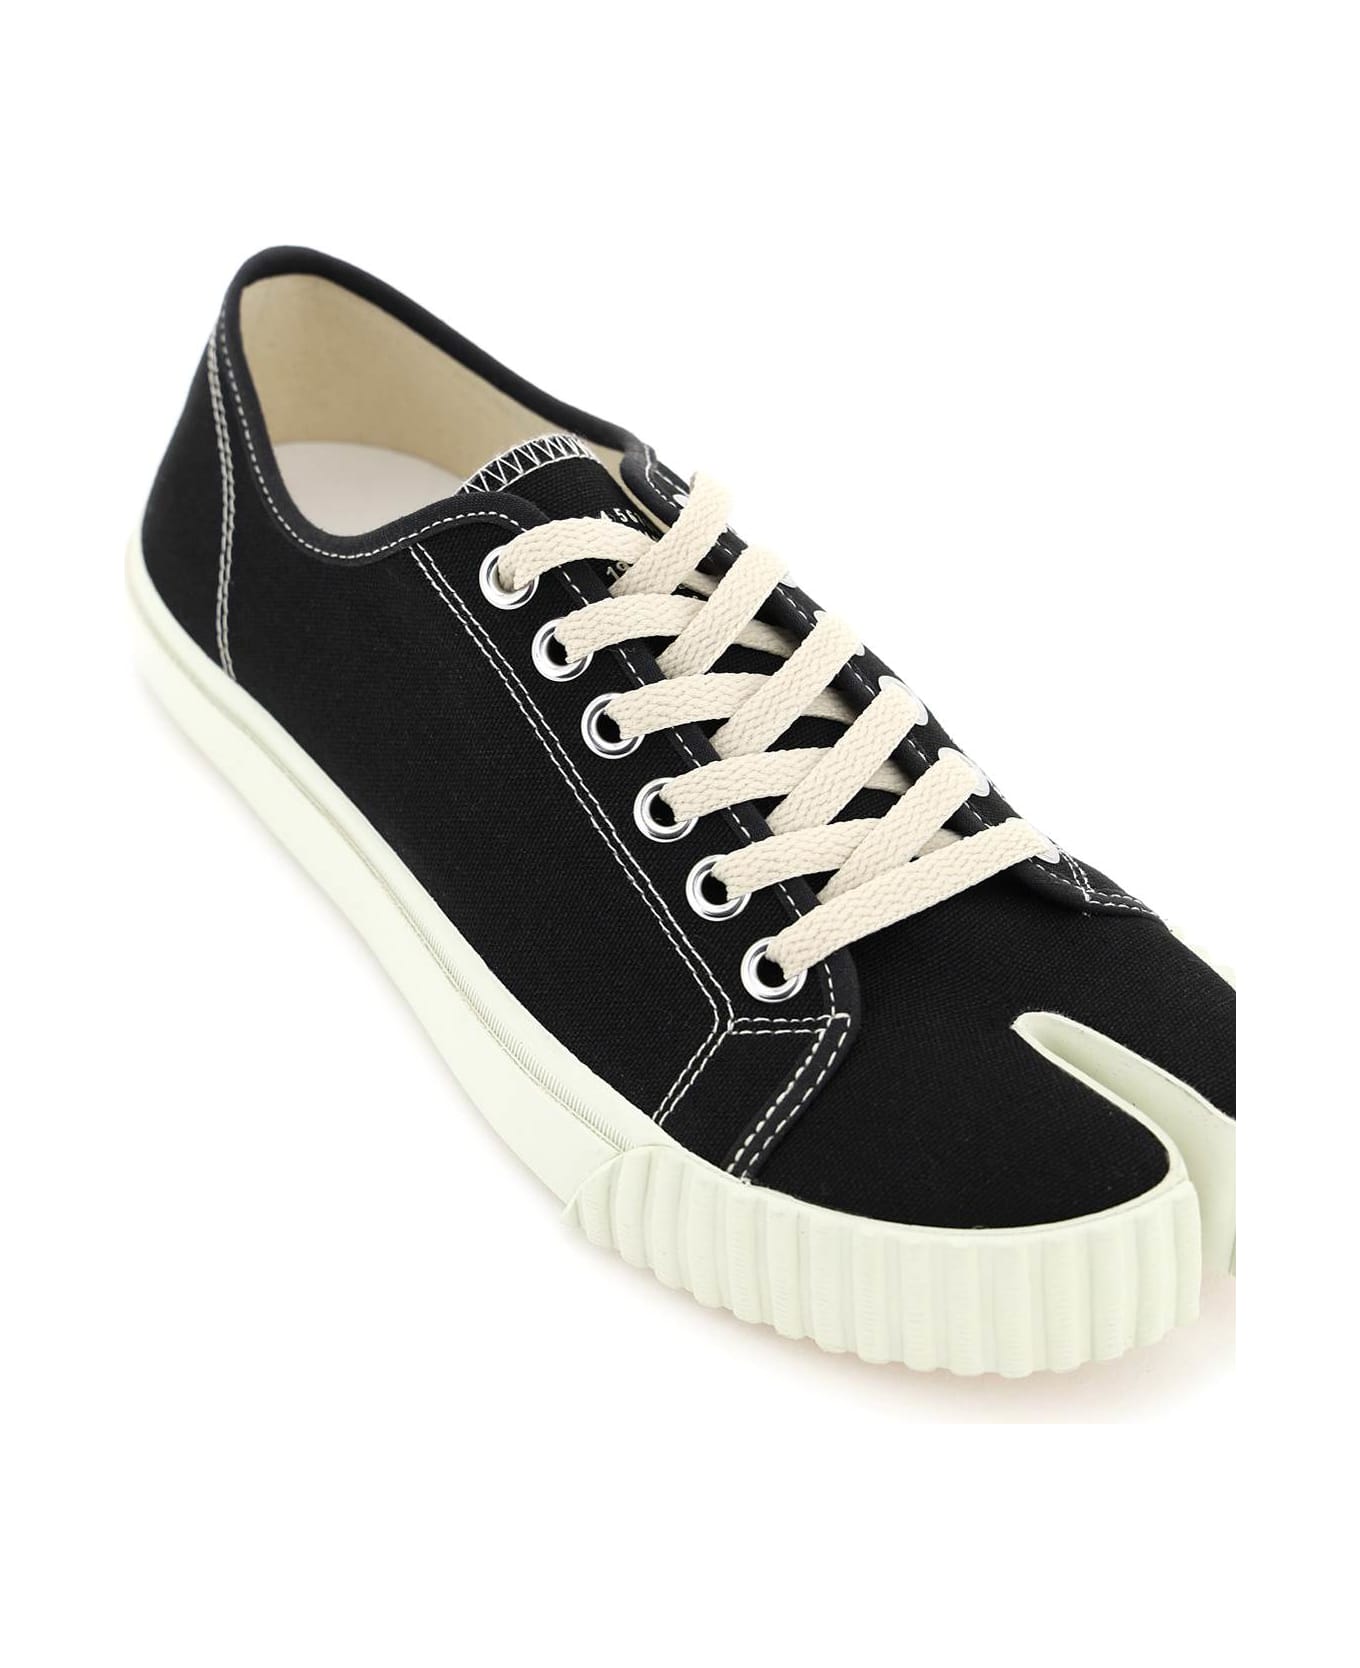 Maison Margiela Cleft Toe Sneakers - Black スニーカー